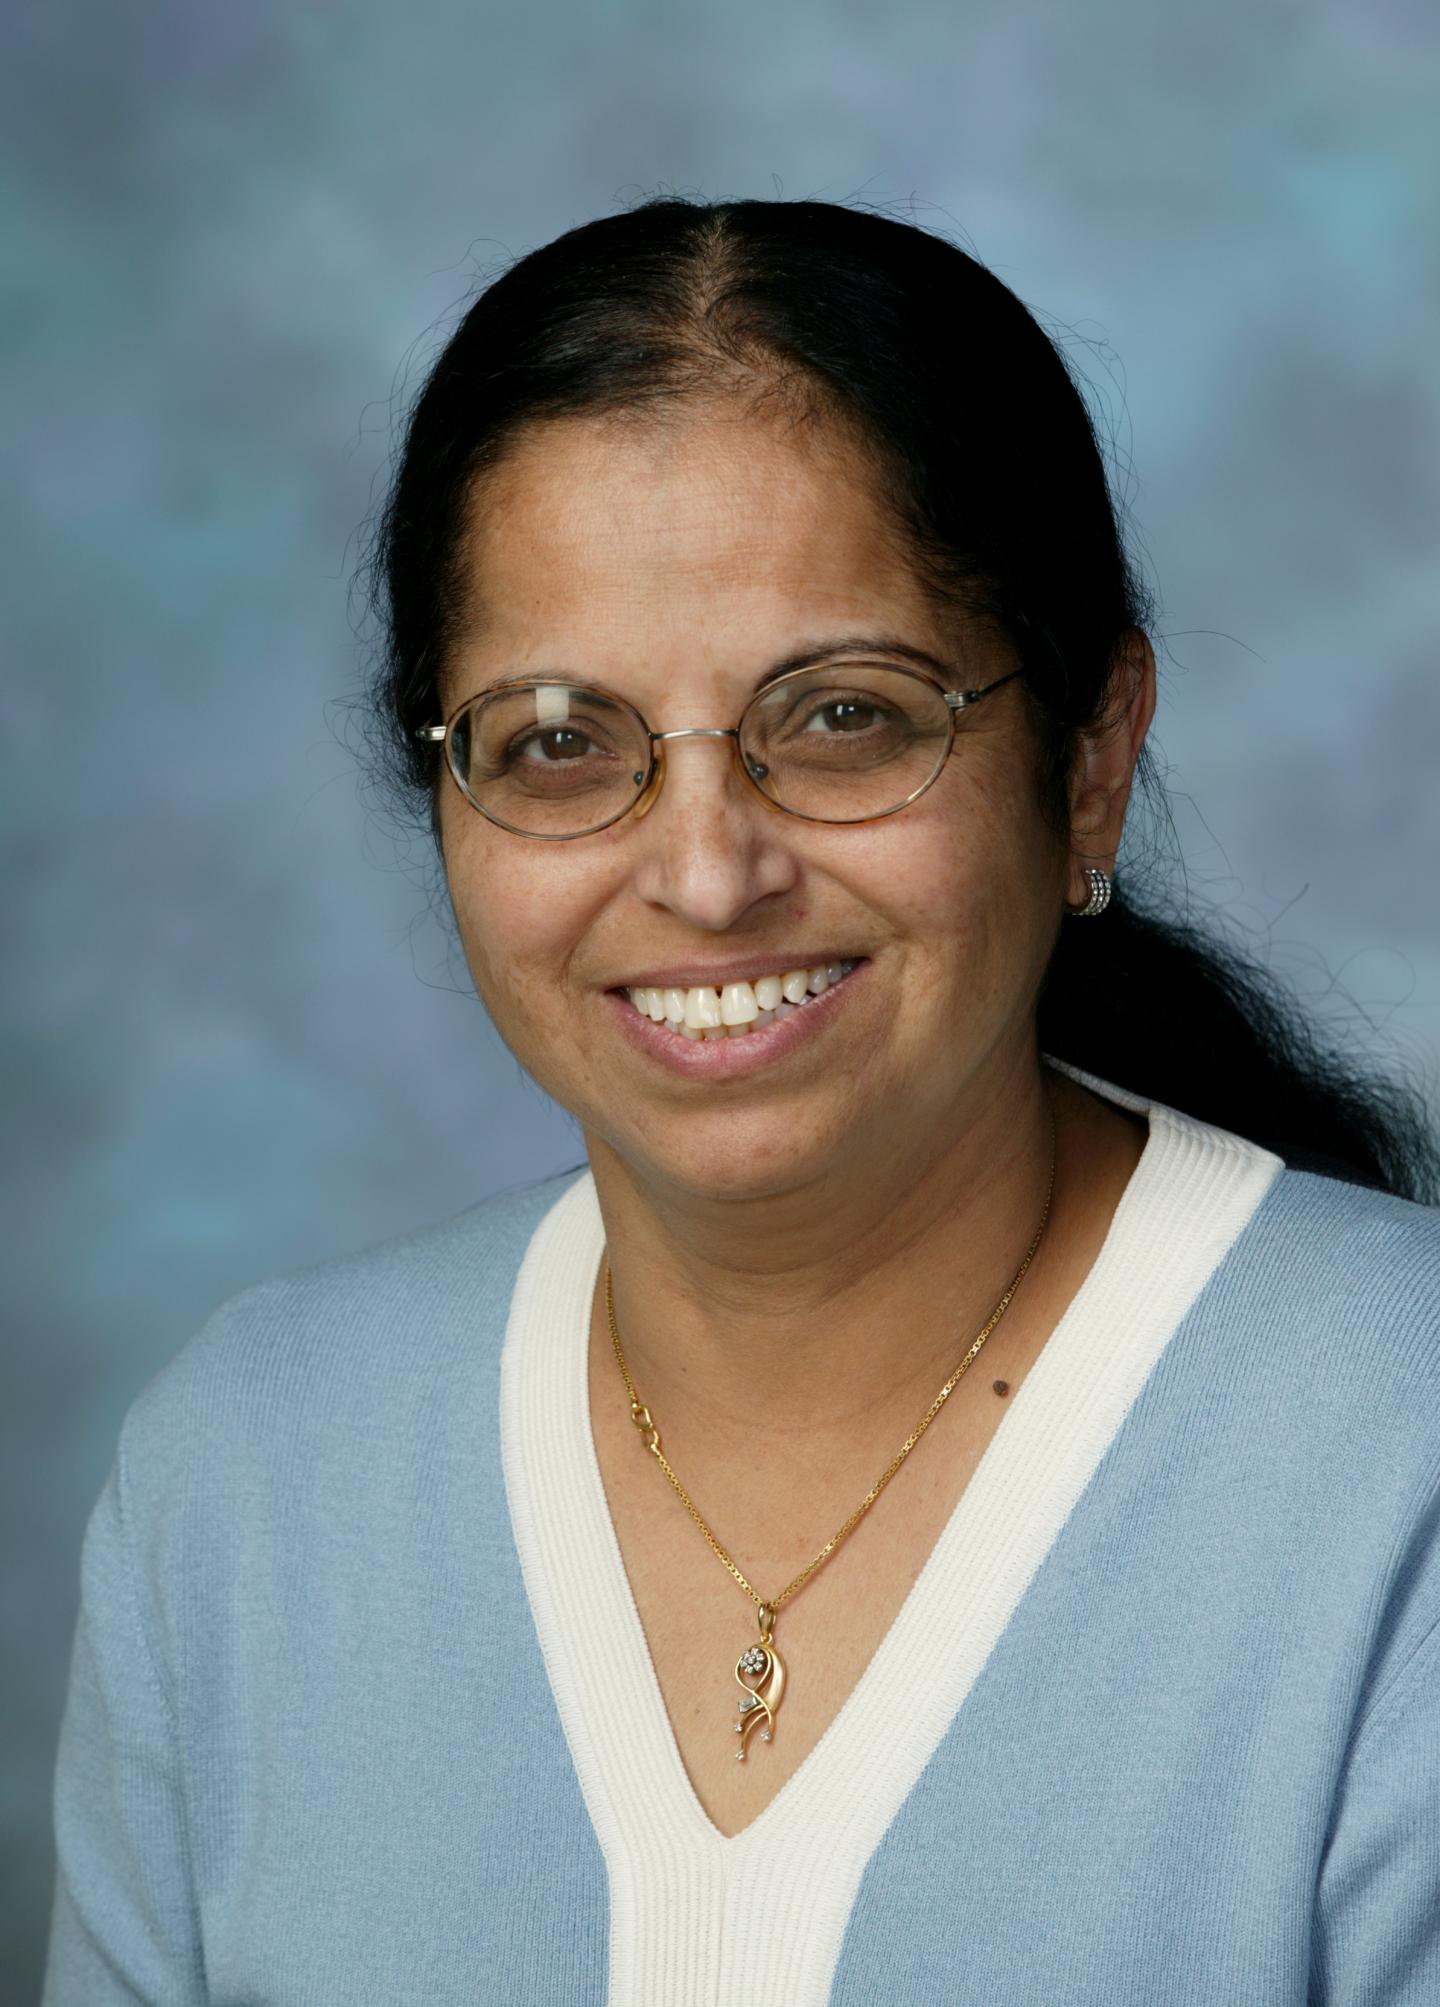 Asha Moudgil, M.D., FASN